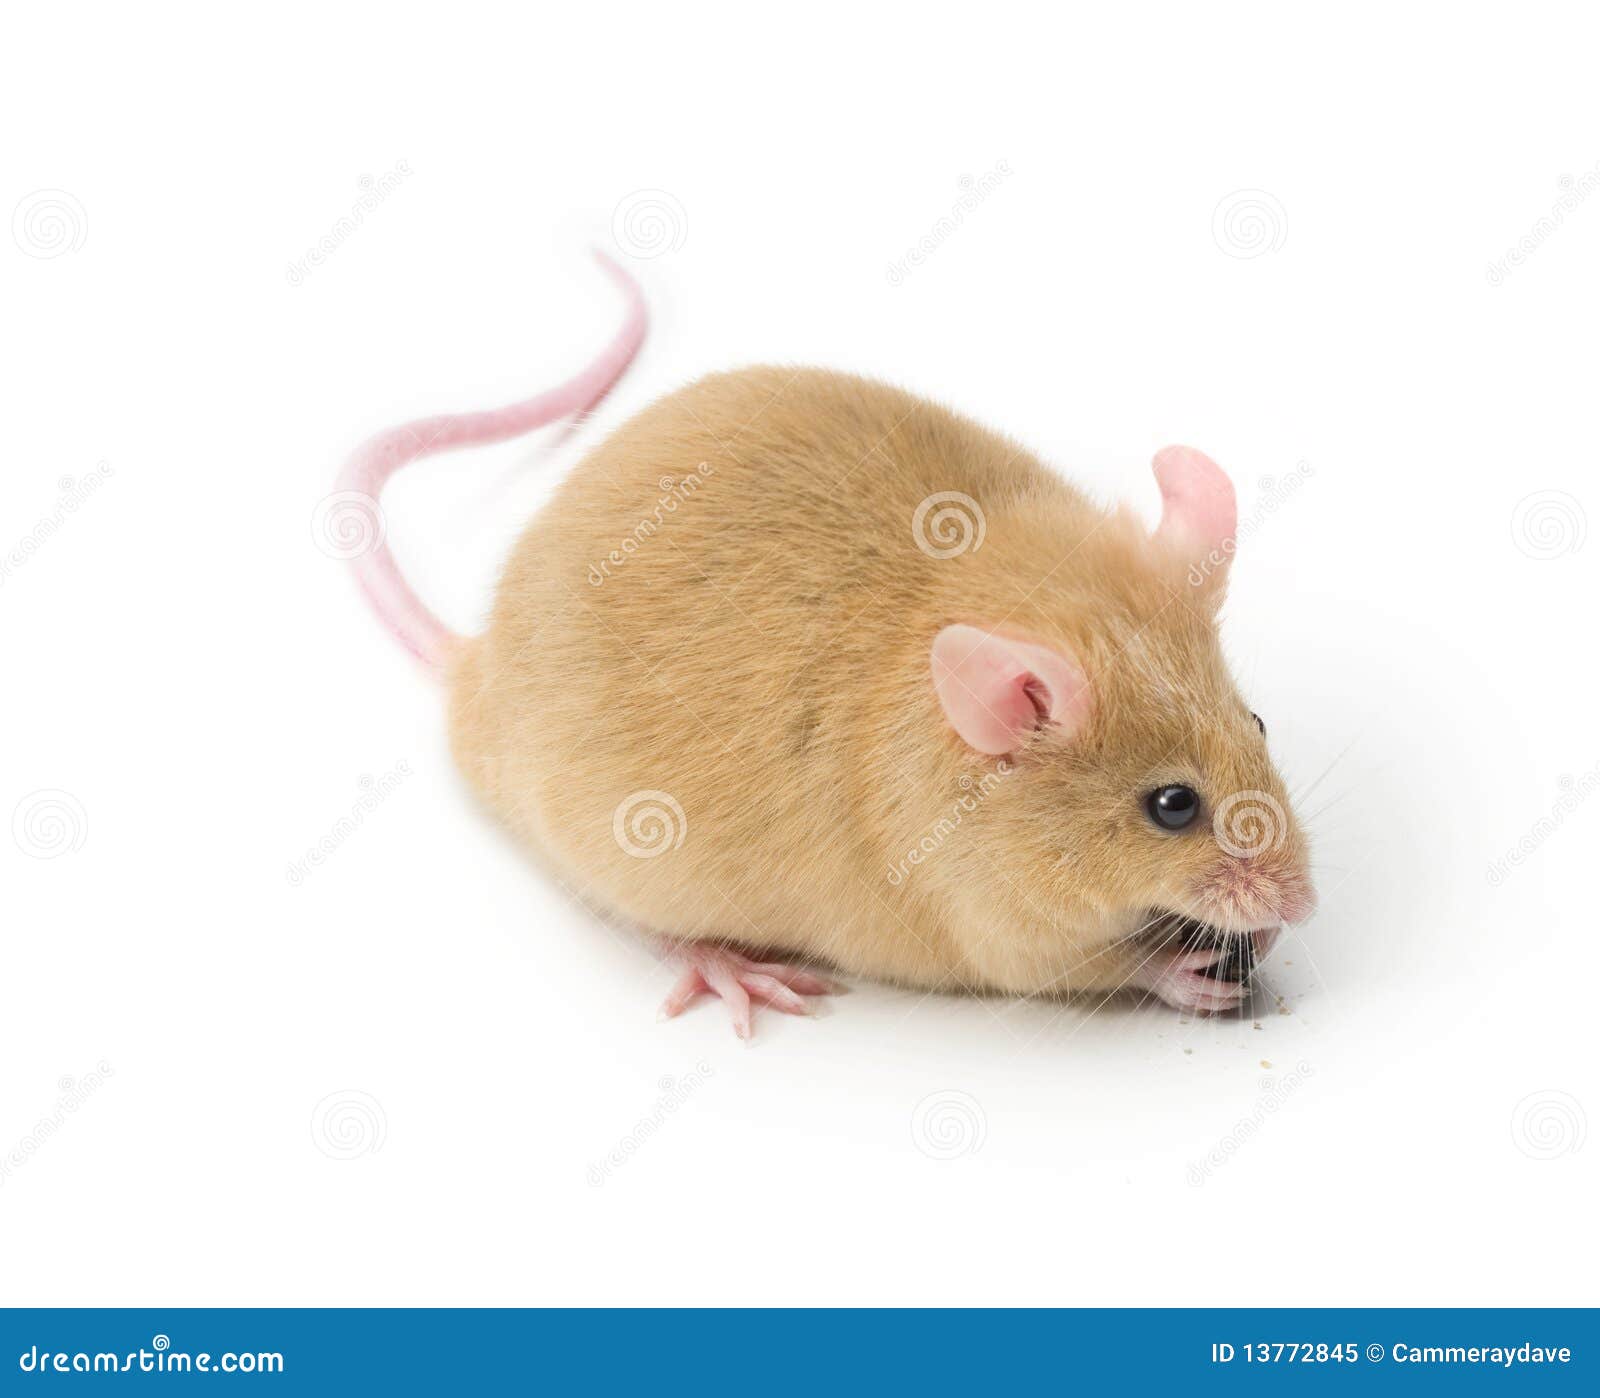 mouse animal pet 